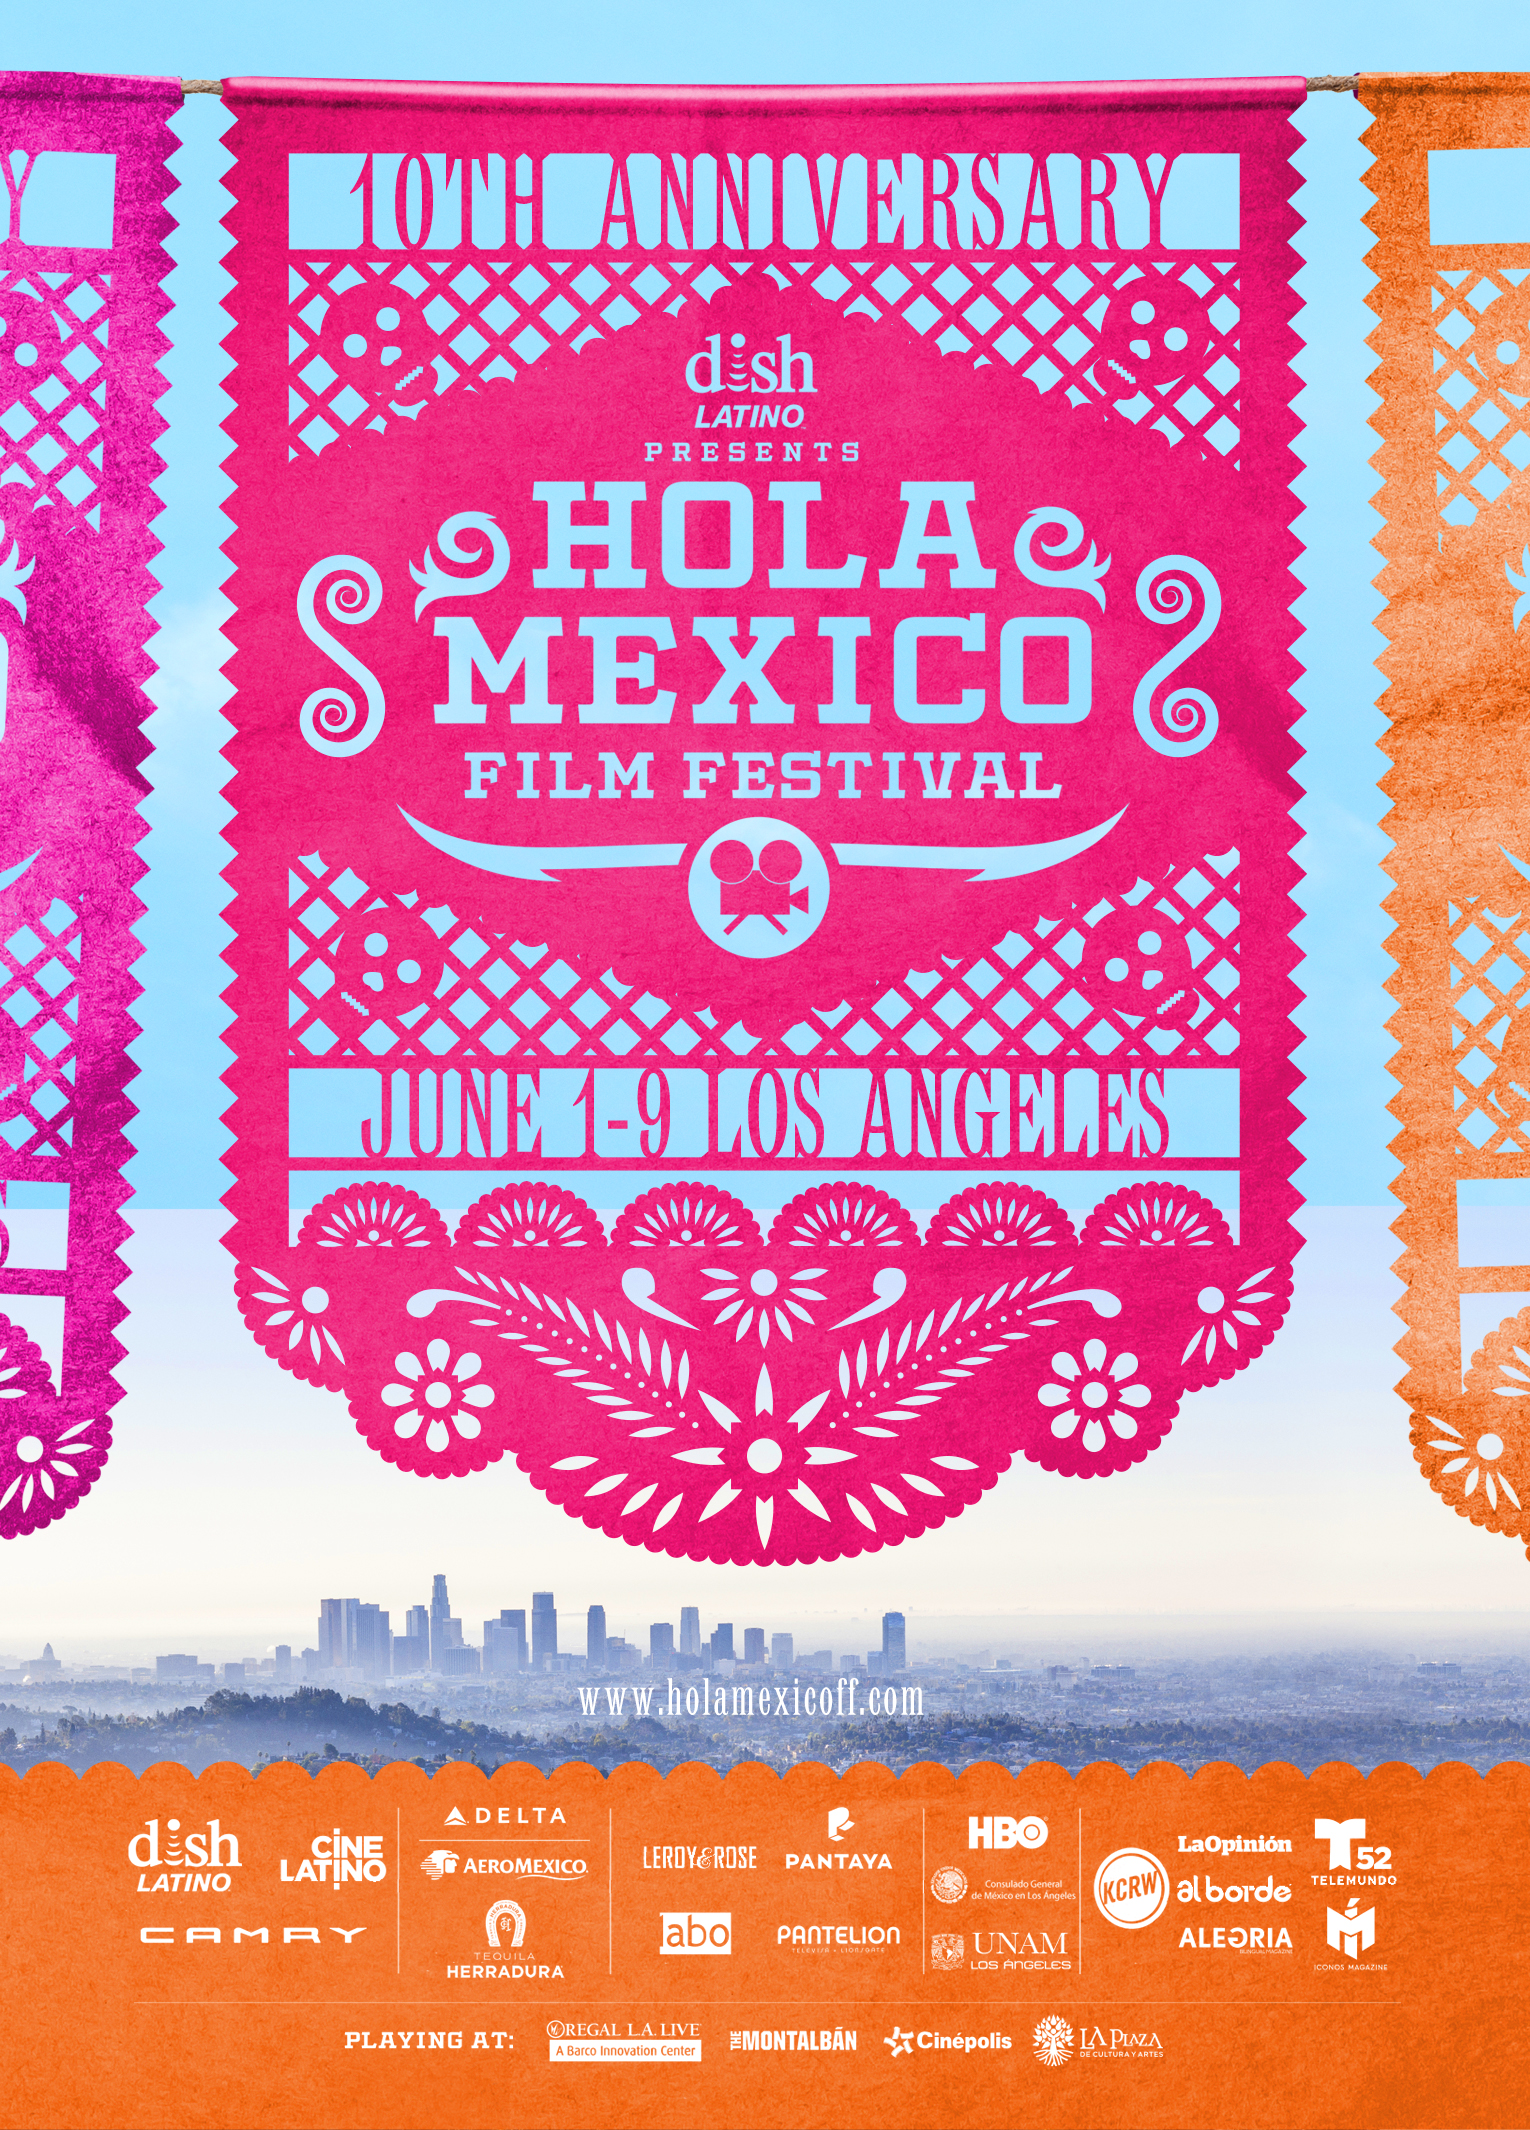 Hola México Film Festival